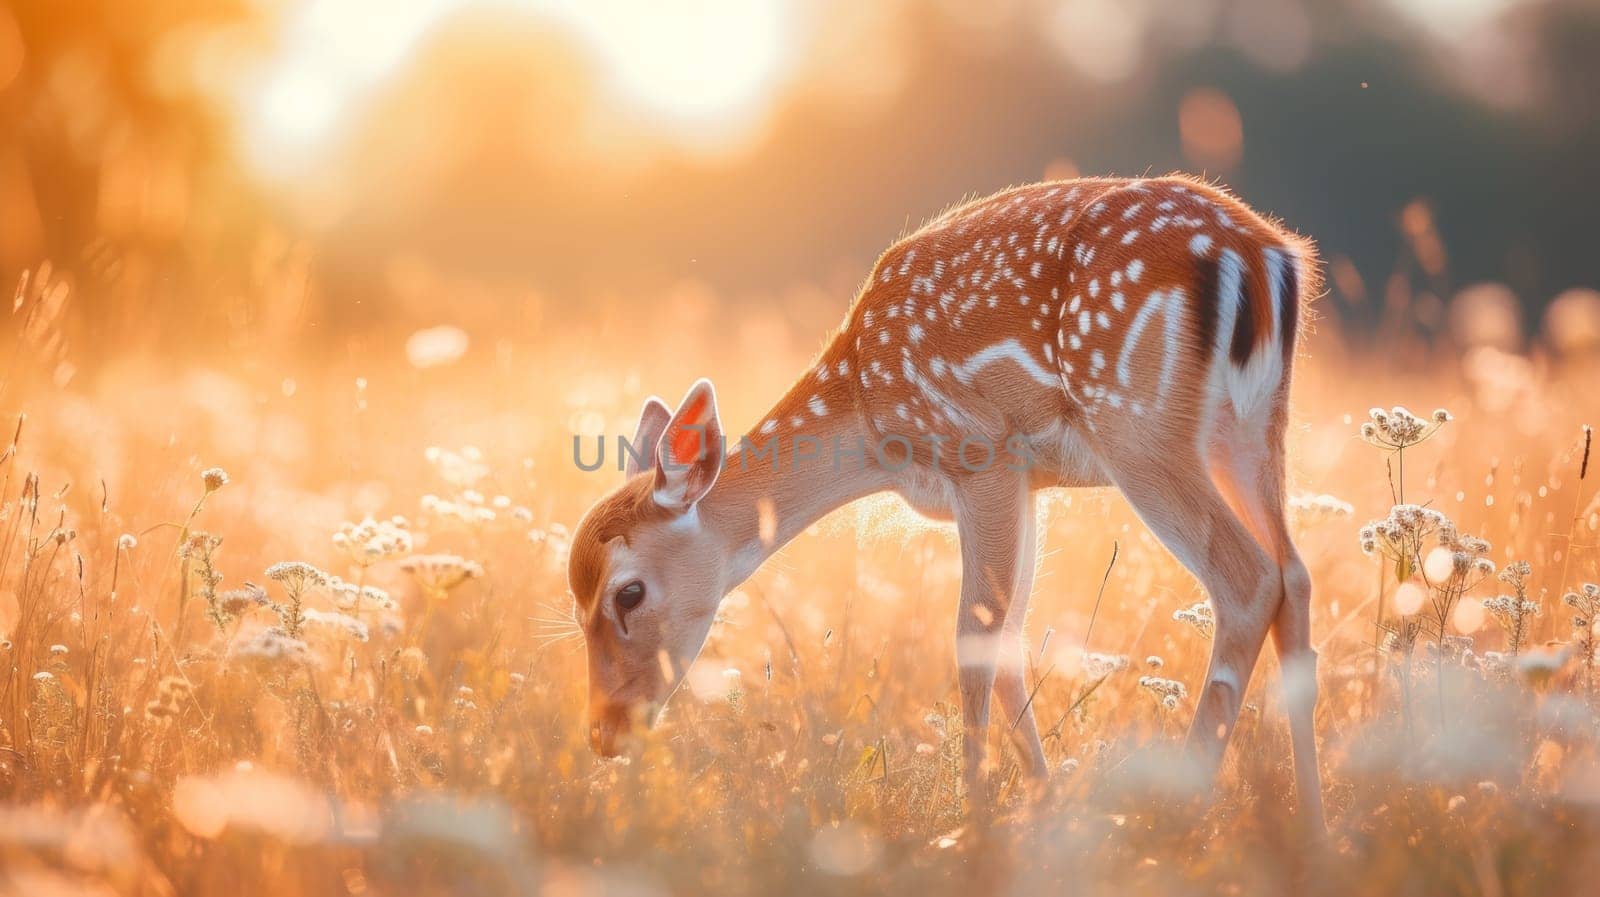 A small deer grazing in a field of tall grass